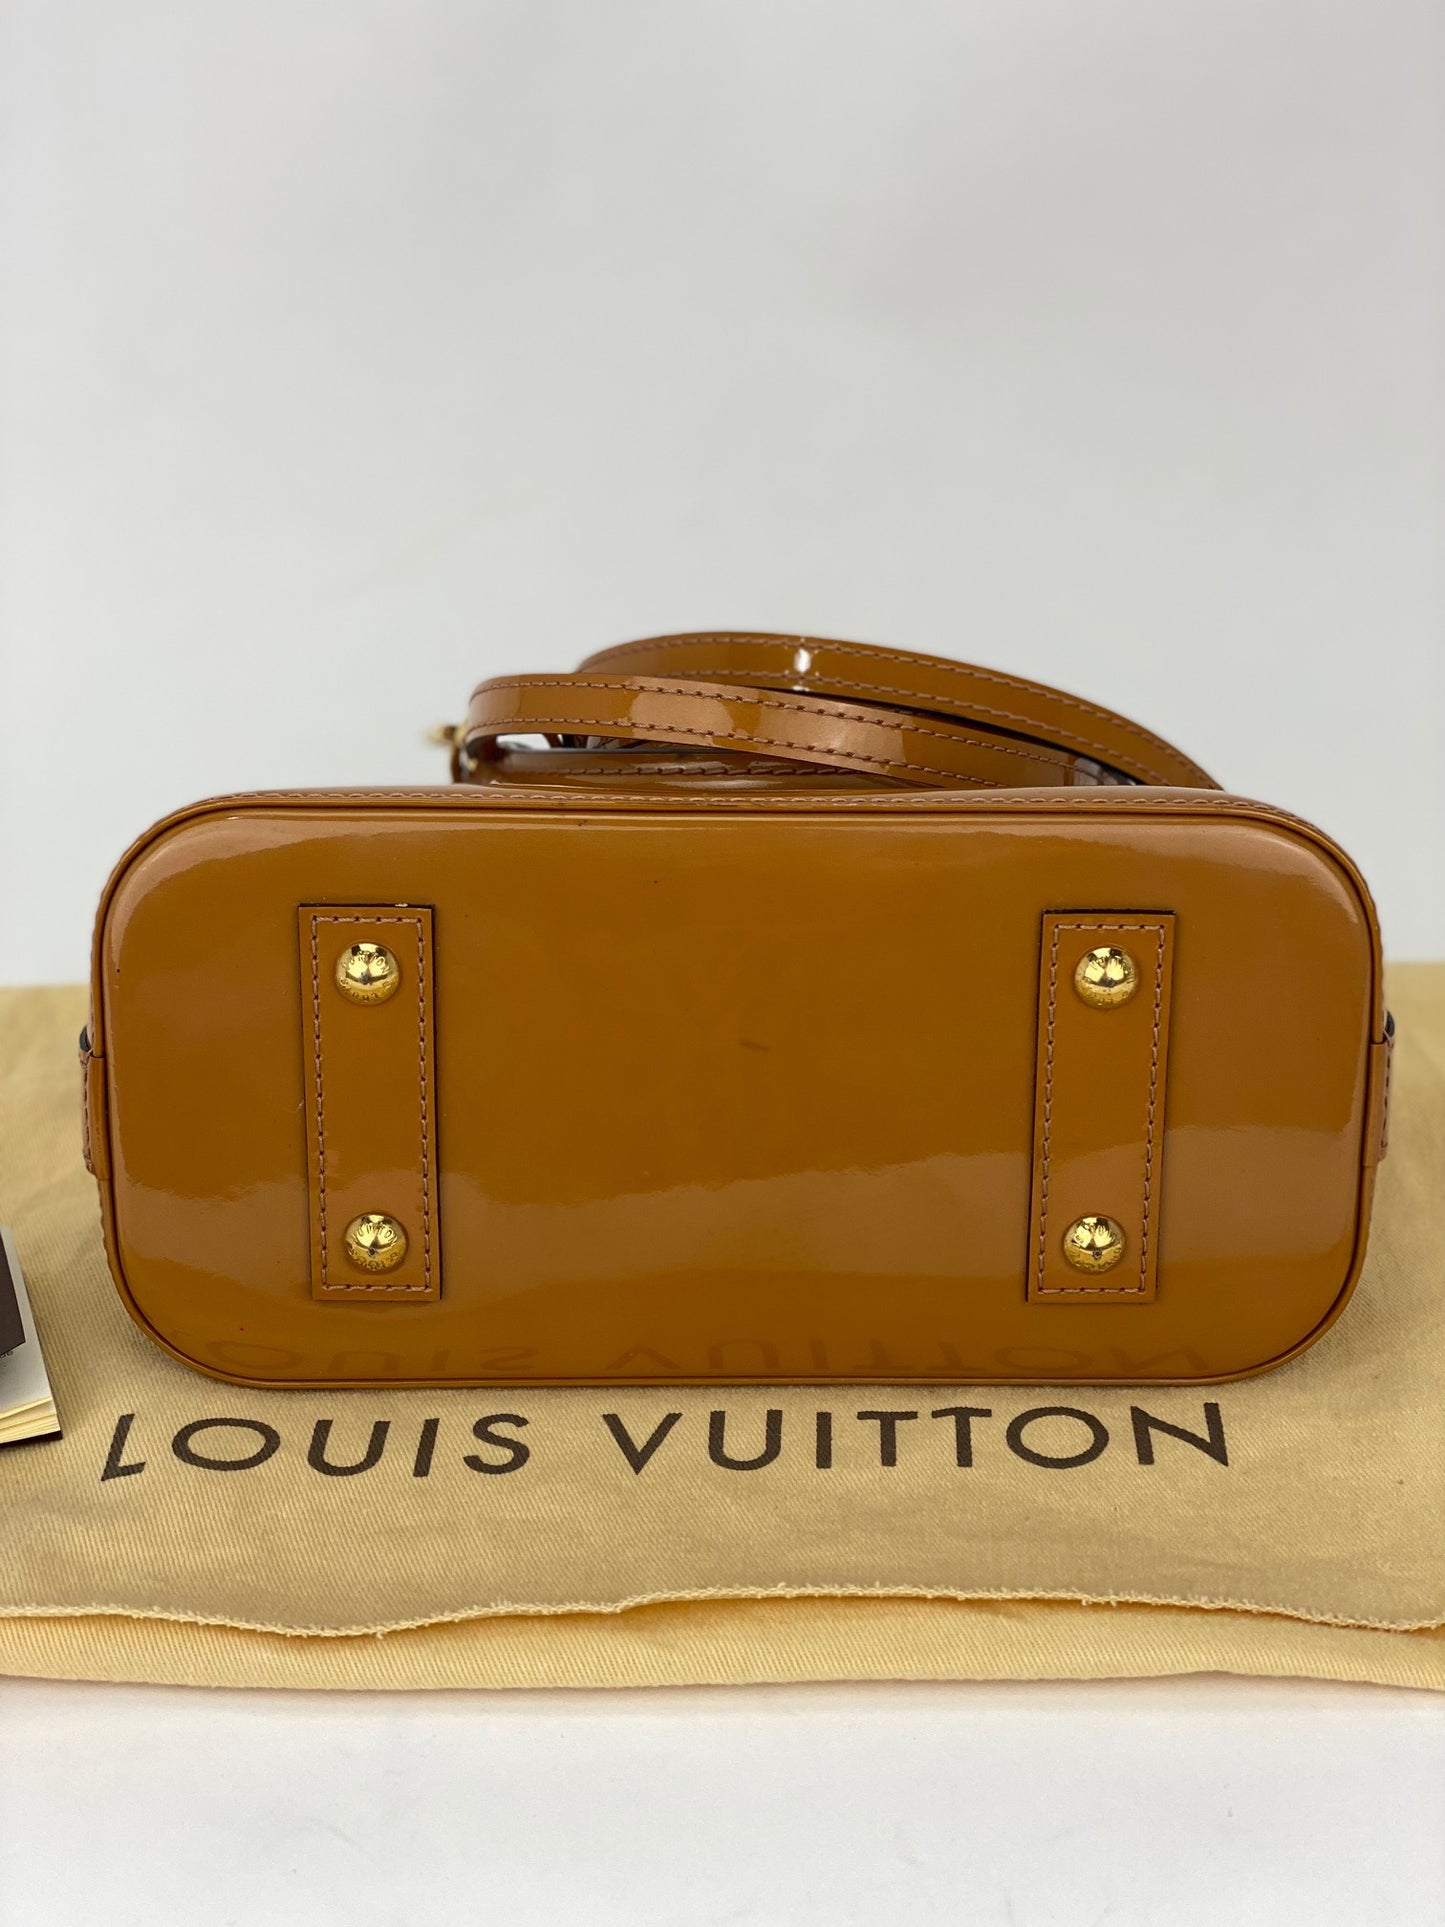 Louis Vuitton Alma Handbag Monogram Vernis with Monogram Canvas